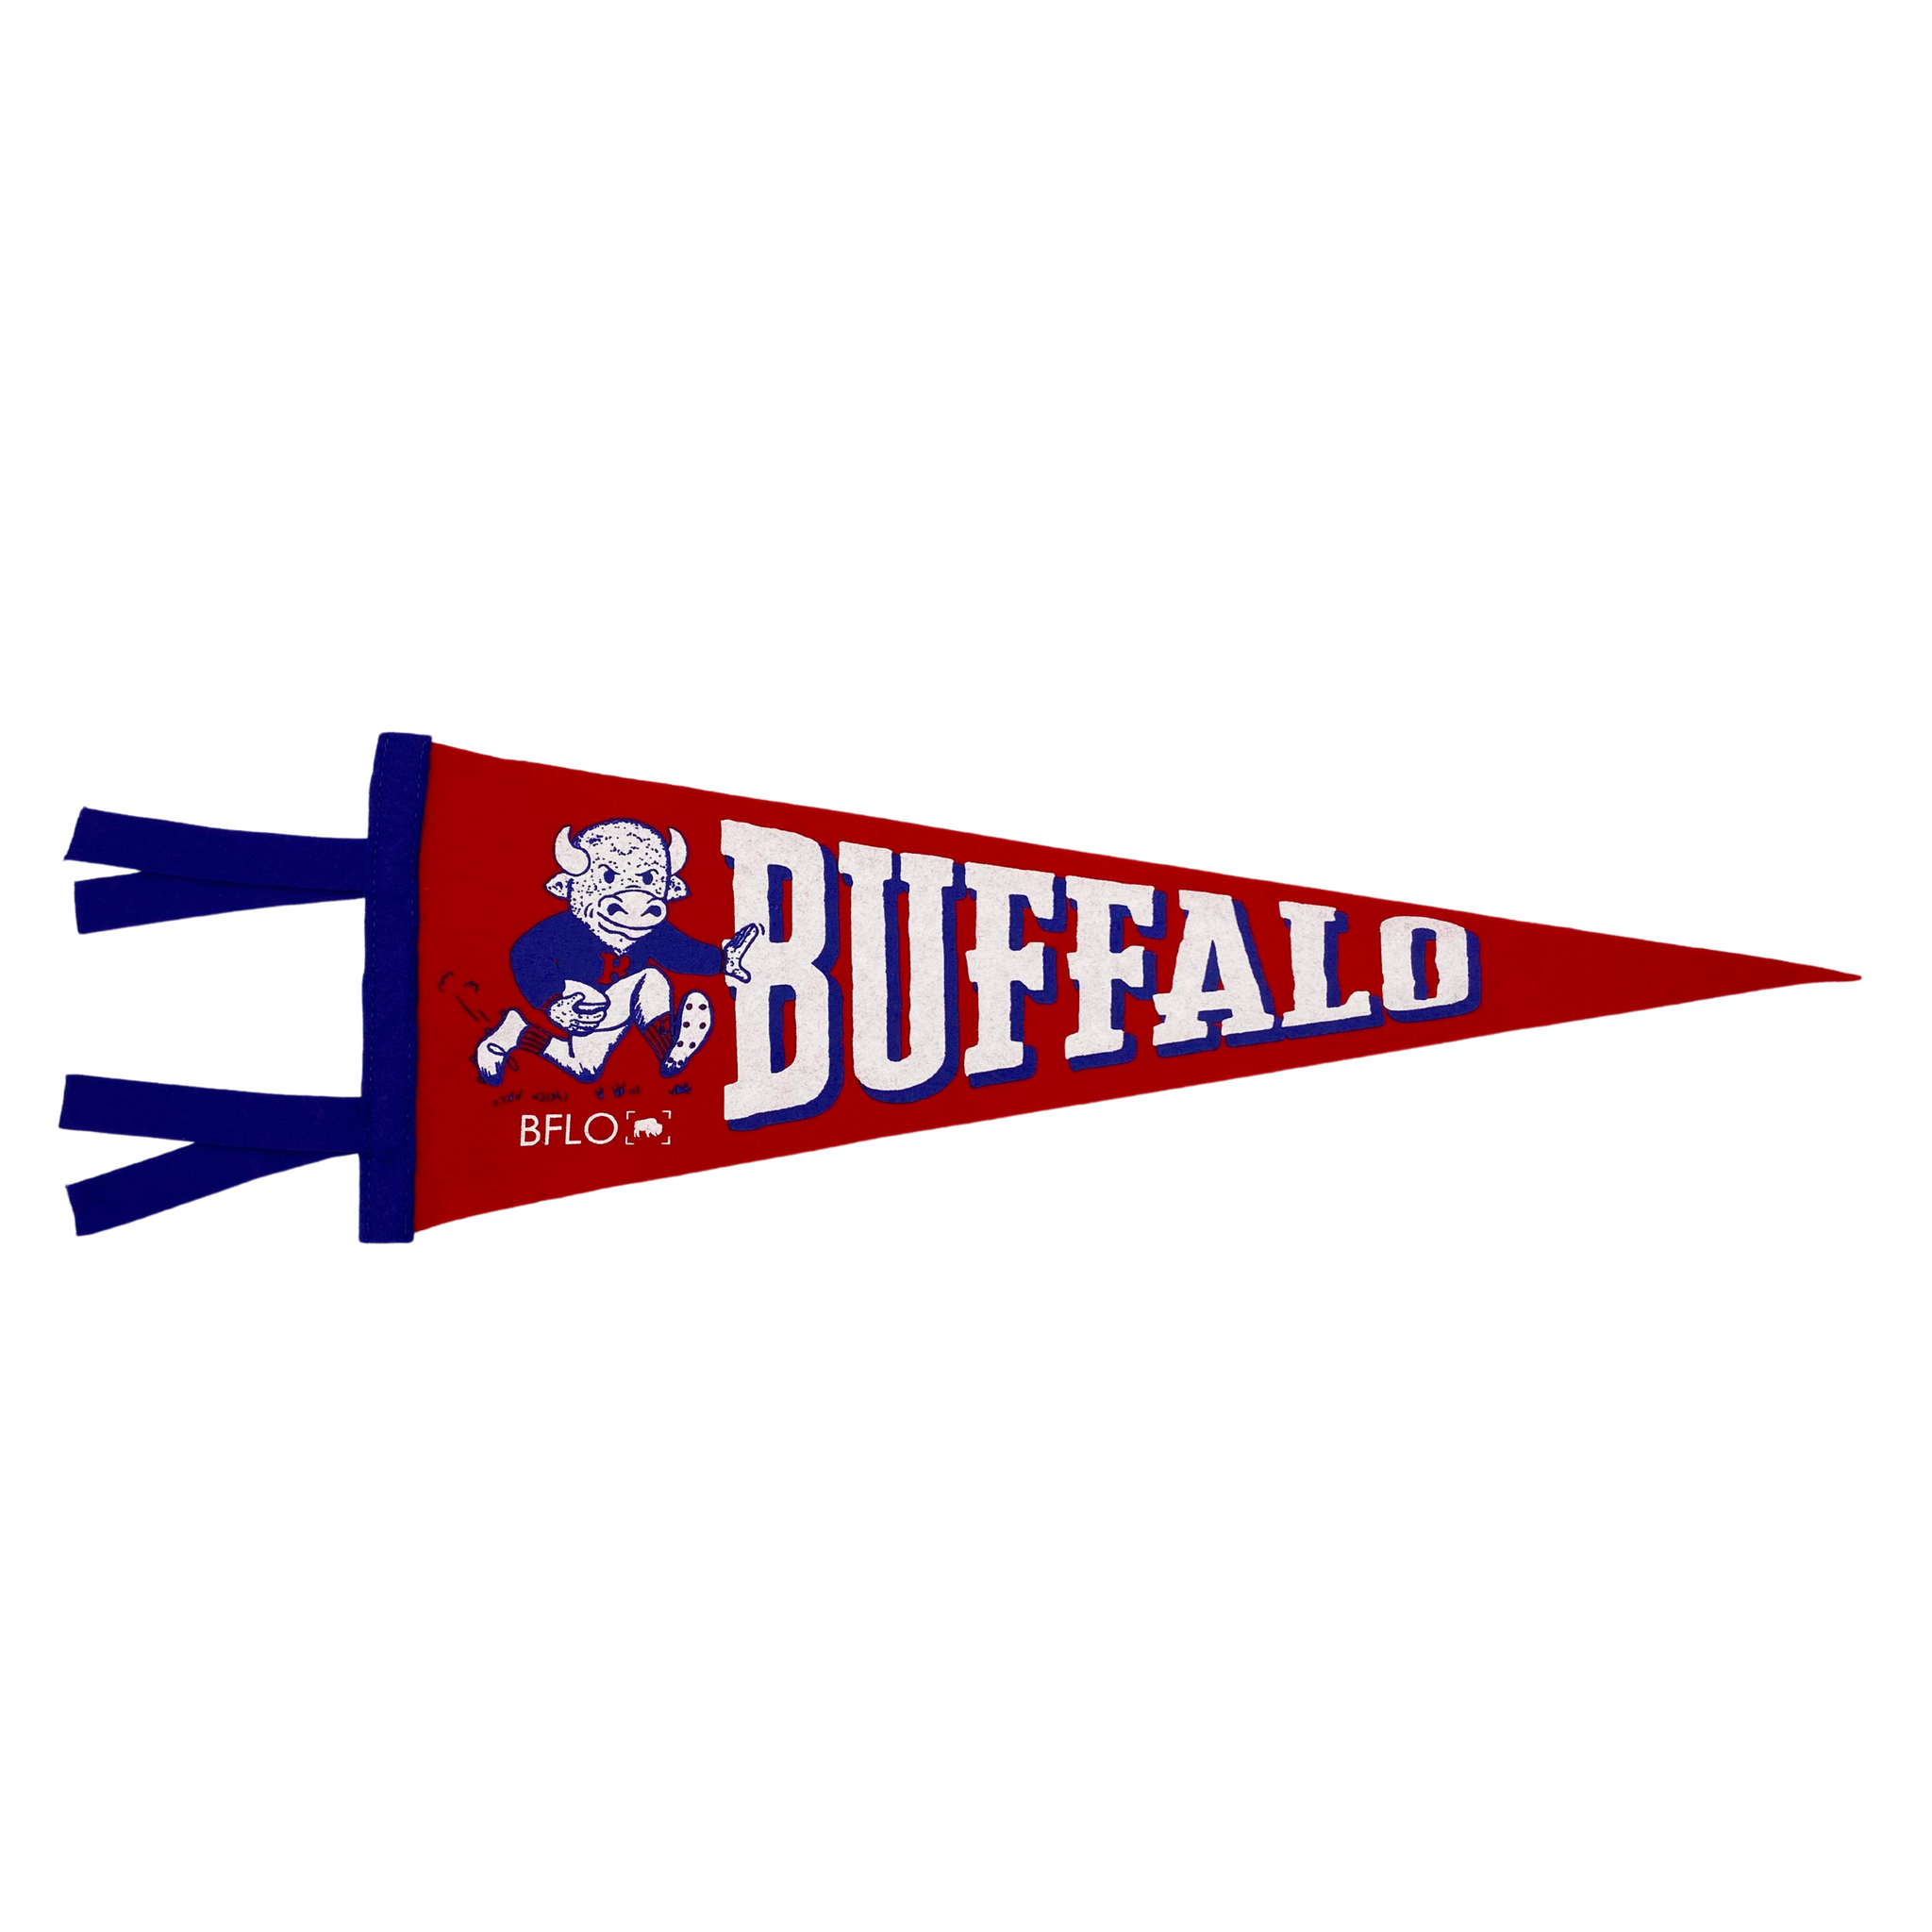 BFLO Buffalo Football Oxford Pennant